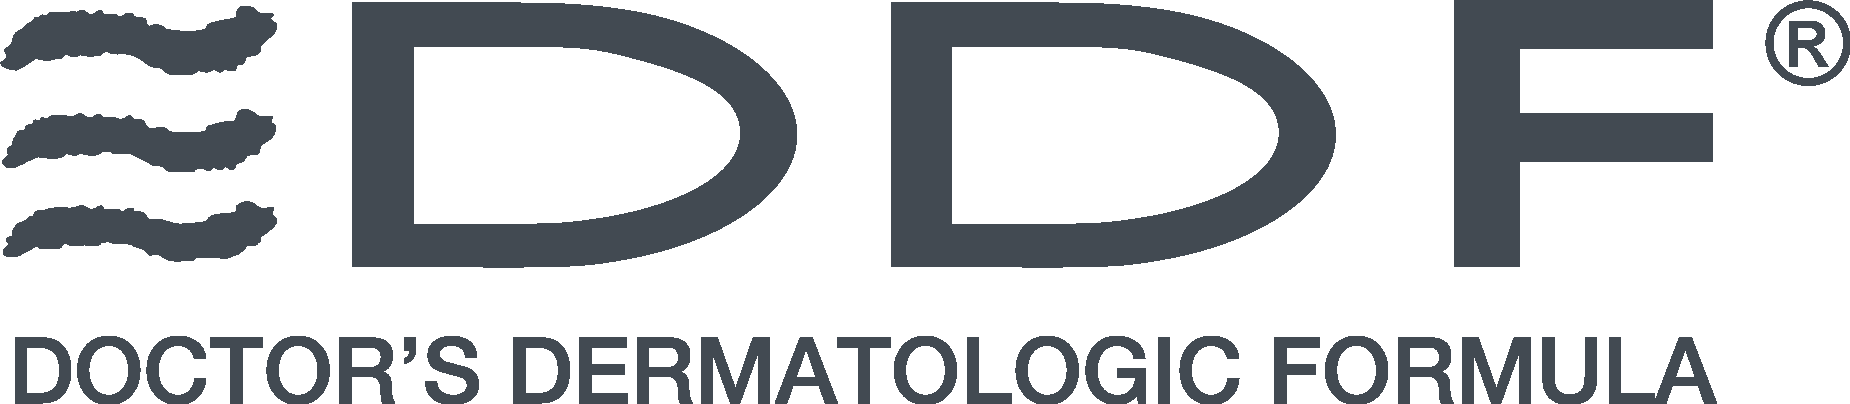 Doctor’s Dermatologic Formula Logo Vector